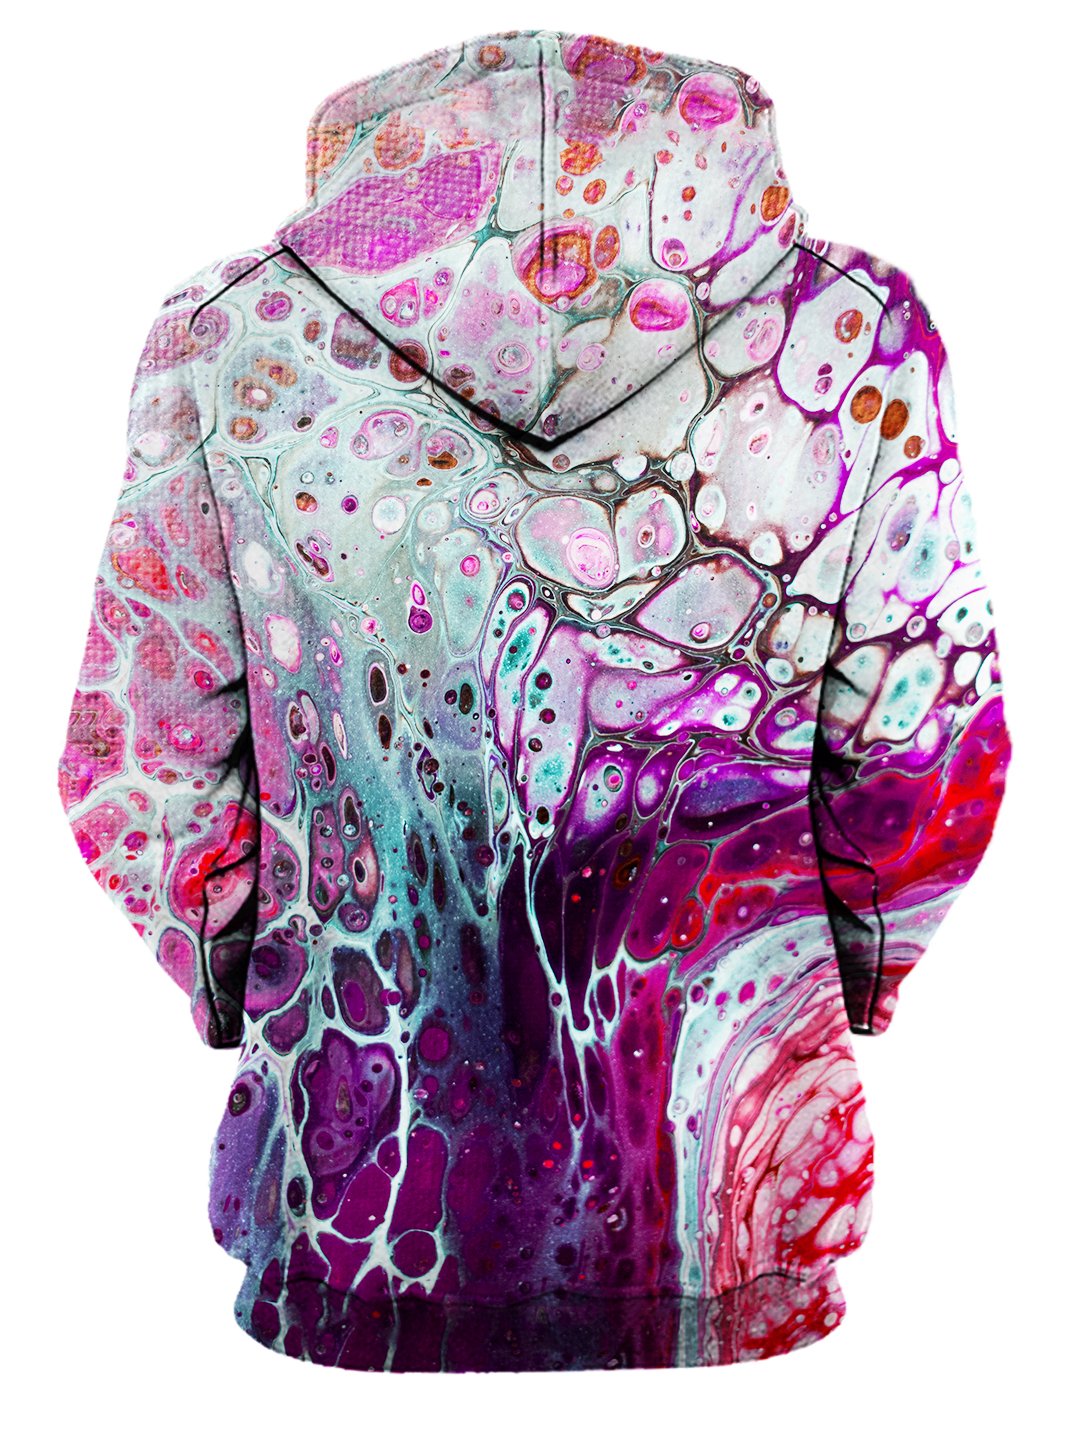 trippy marble painting hoodie print - gratefully dyed apparel